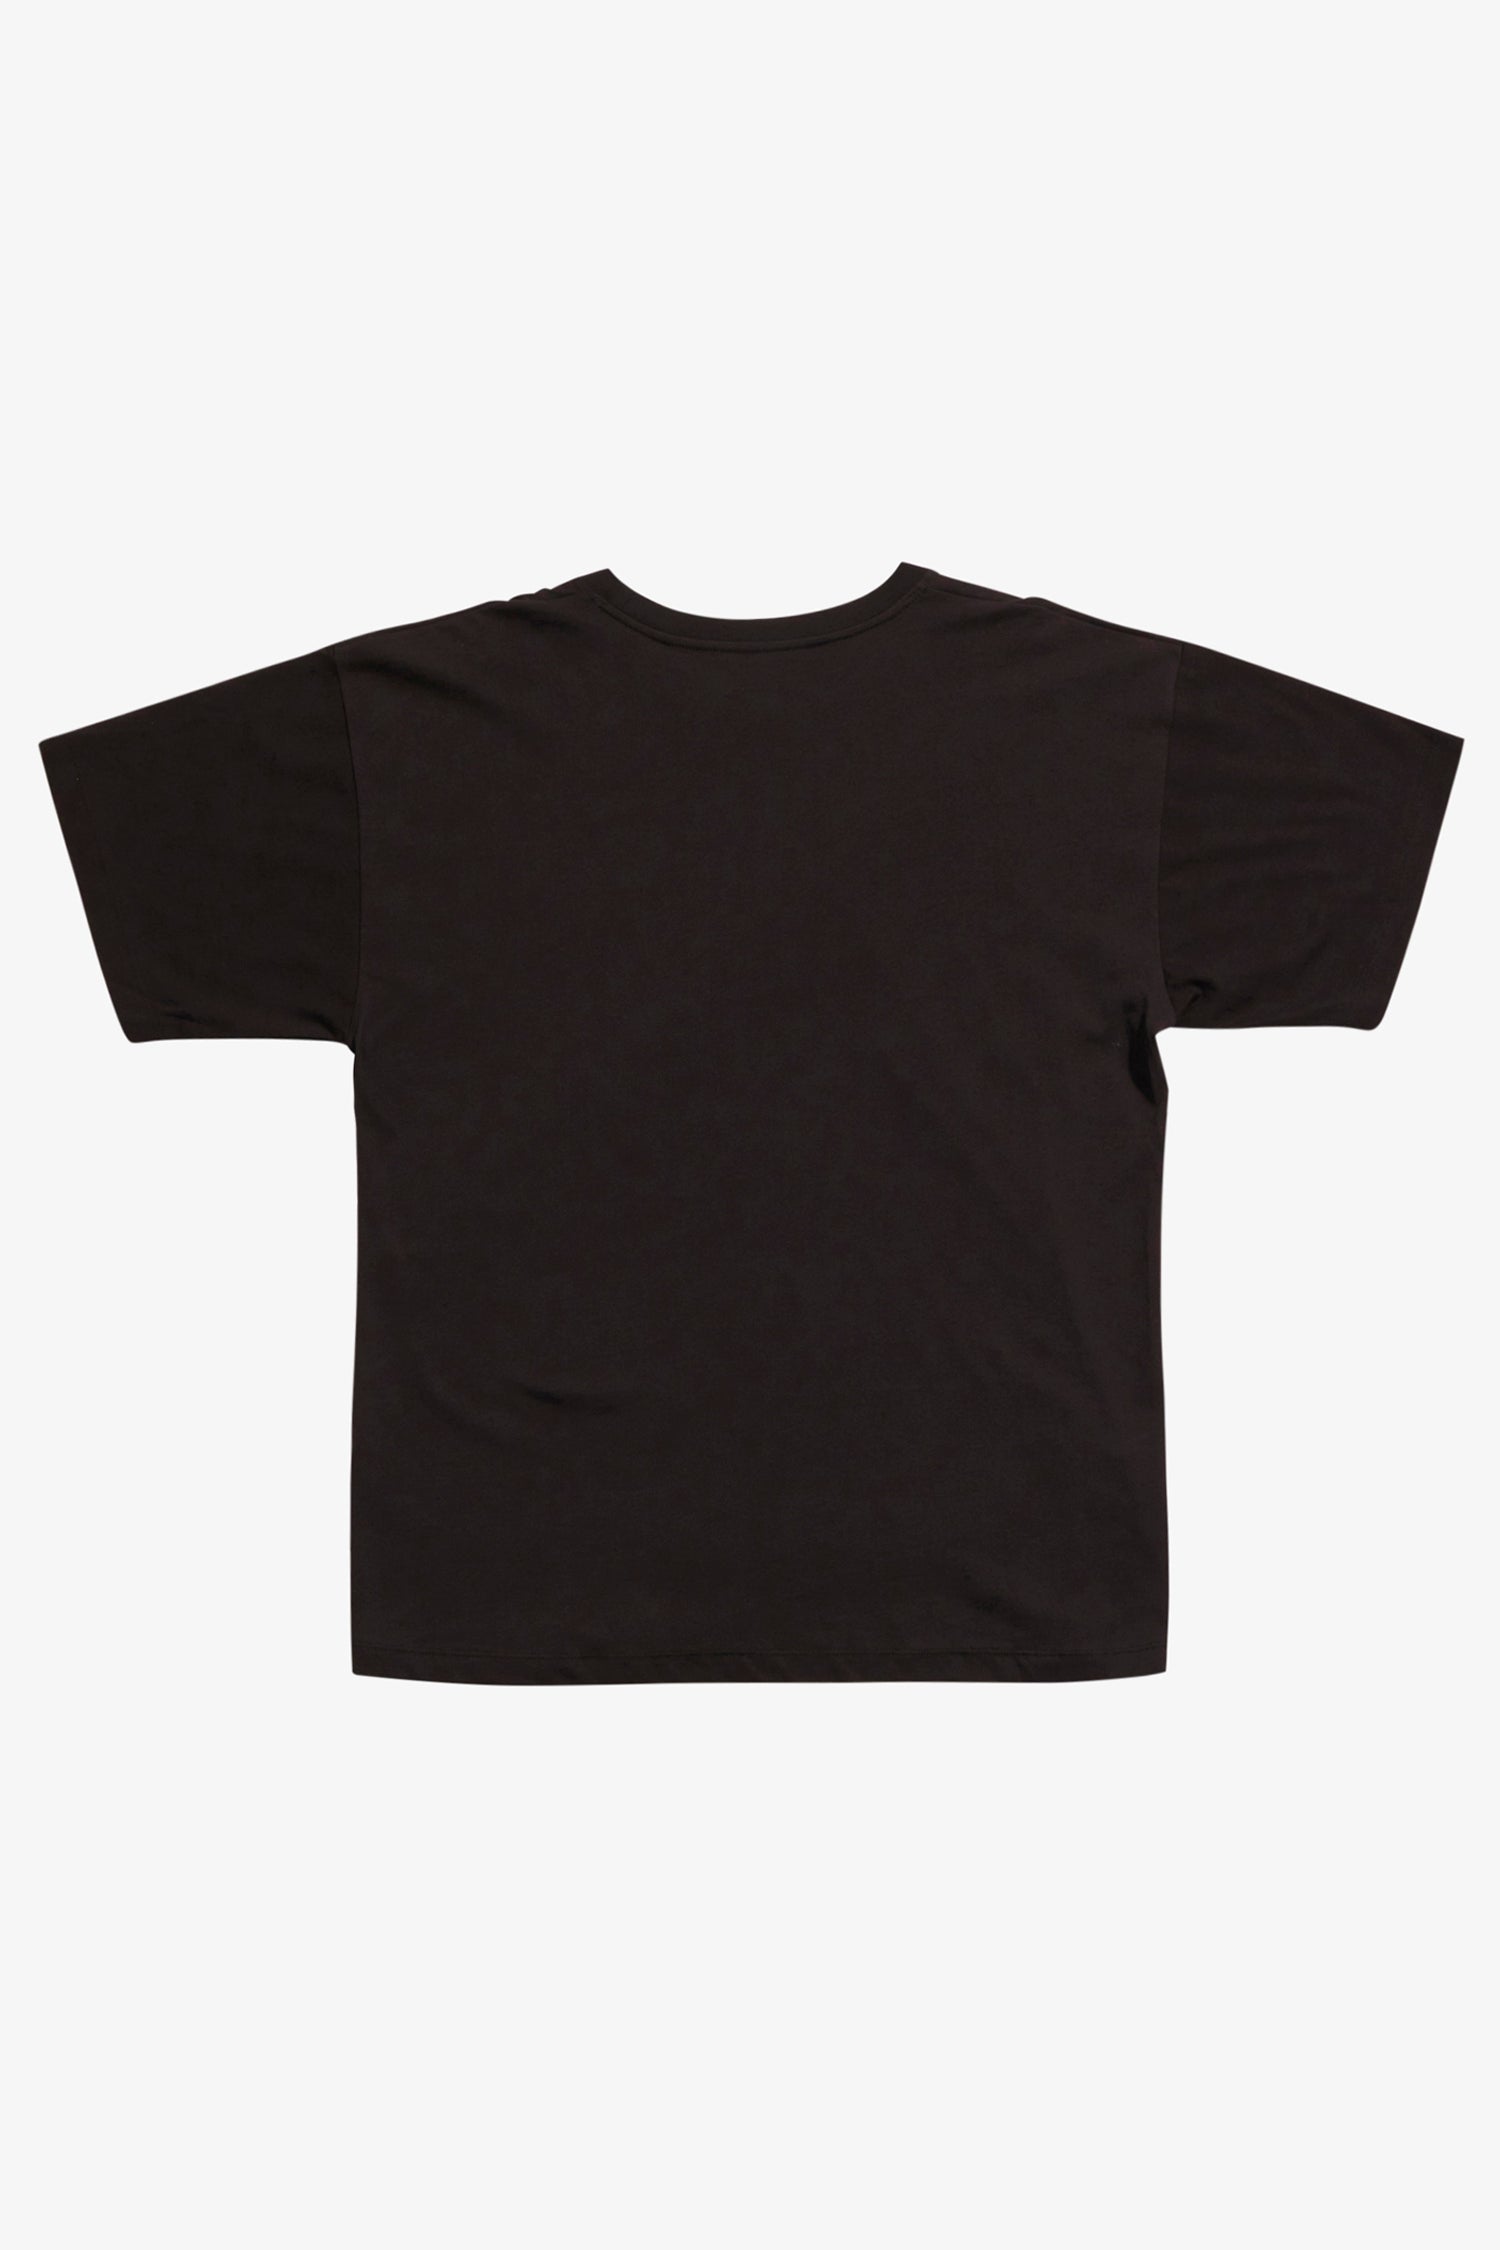 Selectshop FRAME - RASSVET Alien T-Shirt T-Shirt Dubai